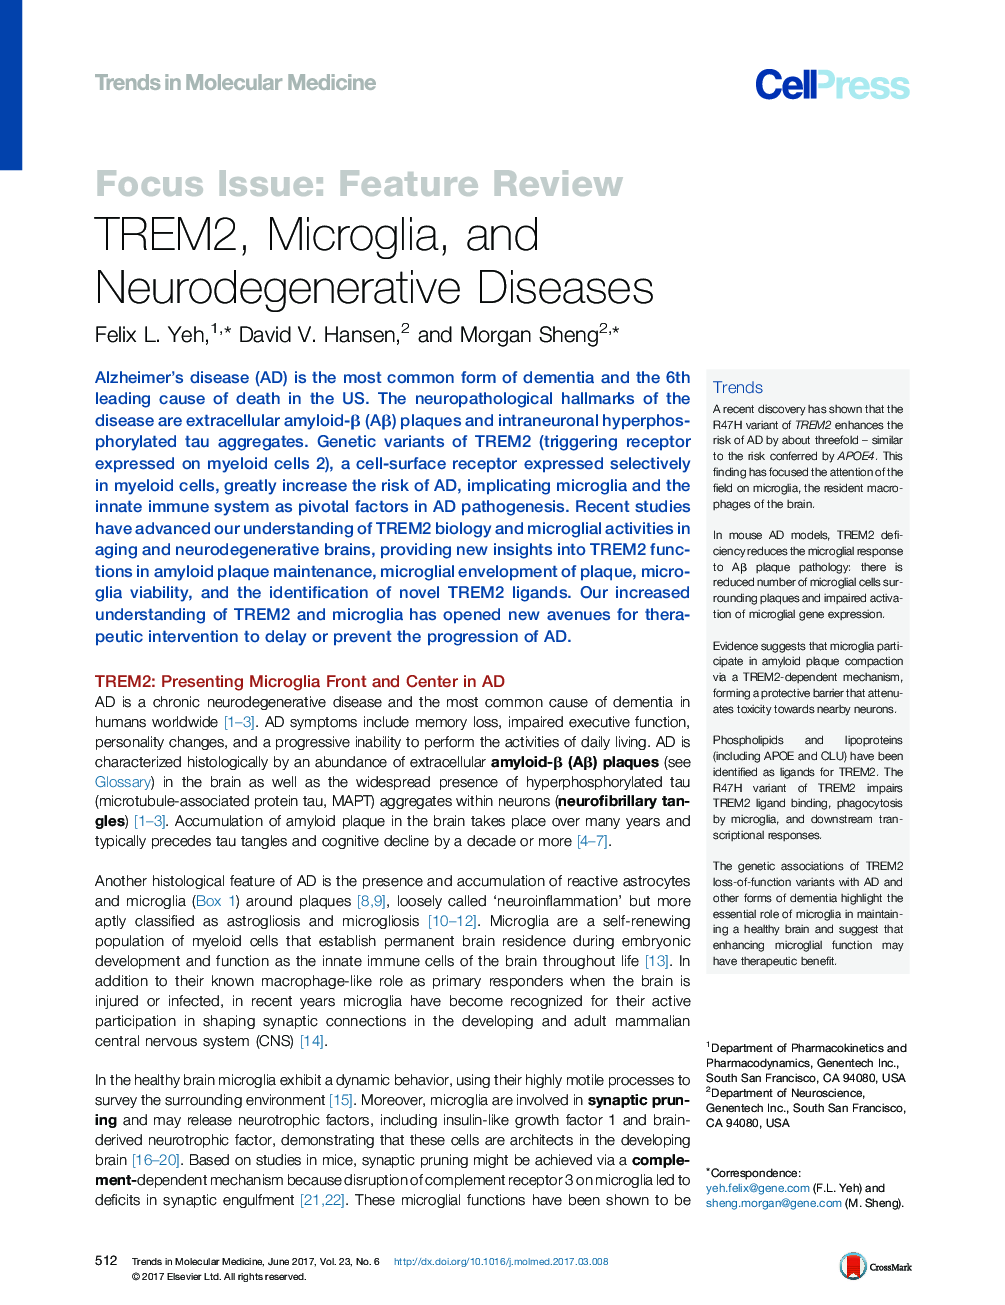 TREM2, Microglia, and Neurodegenerative Diseases